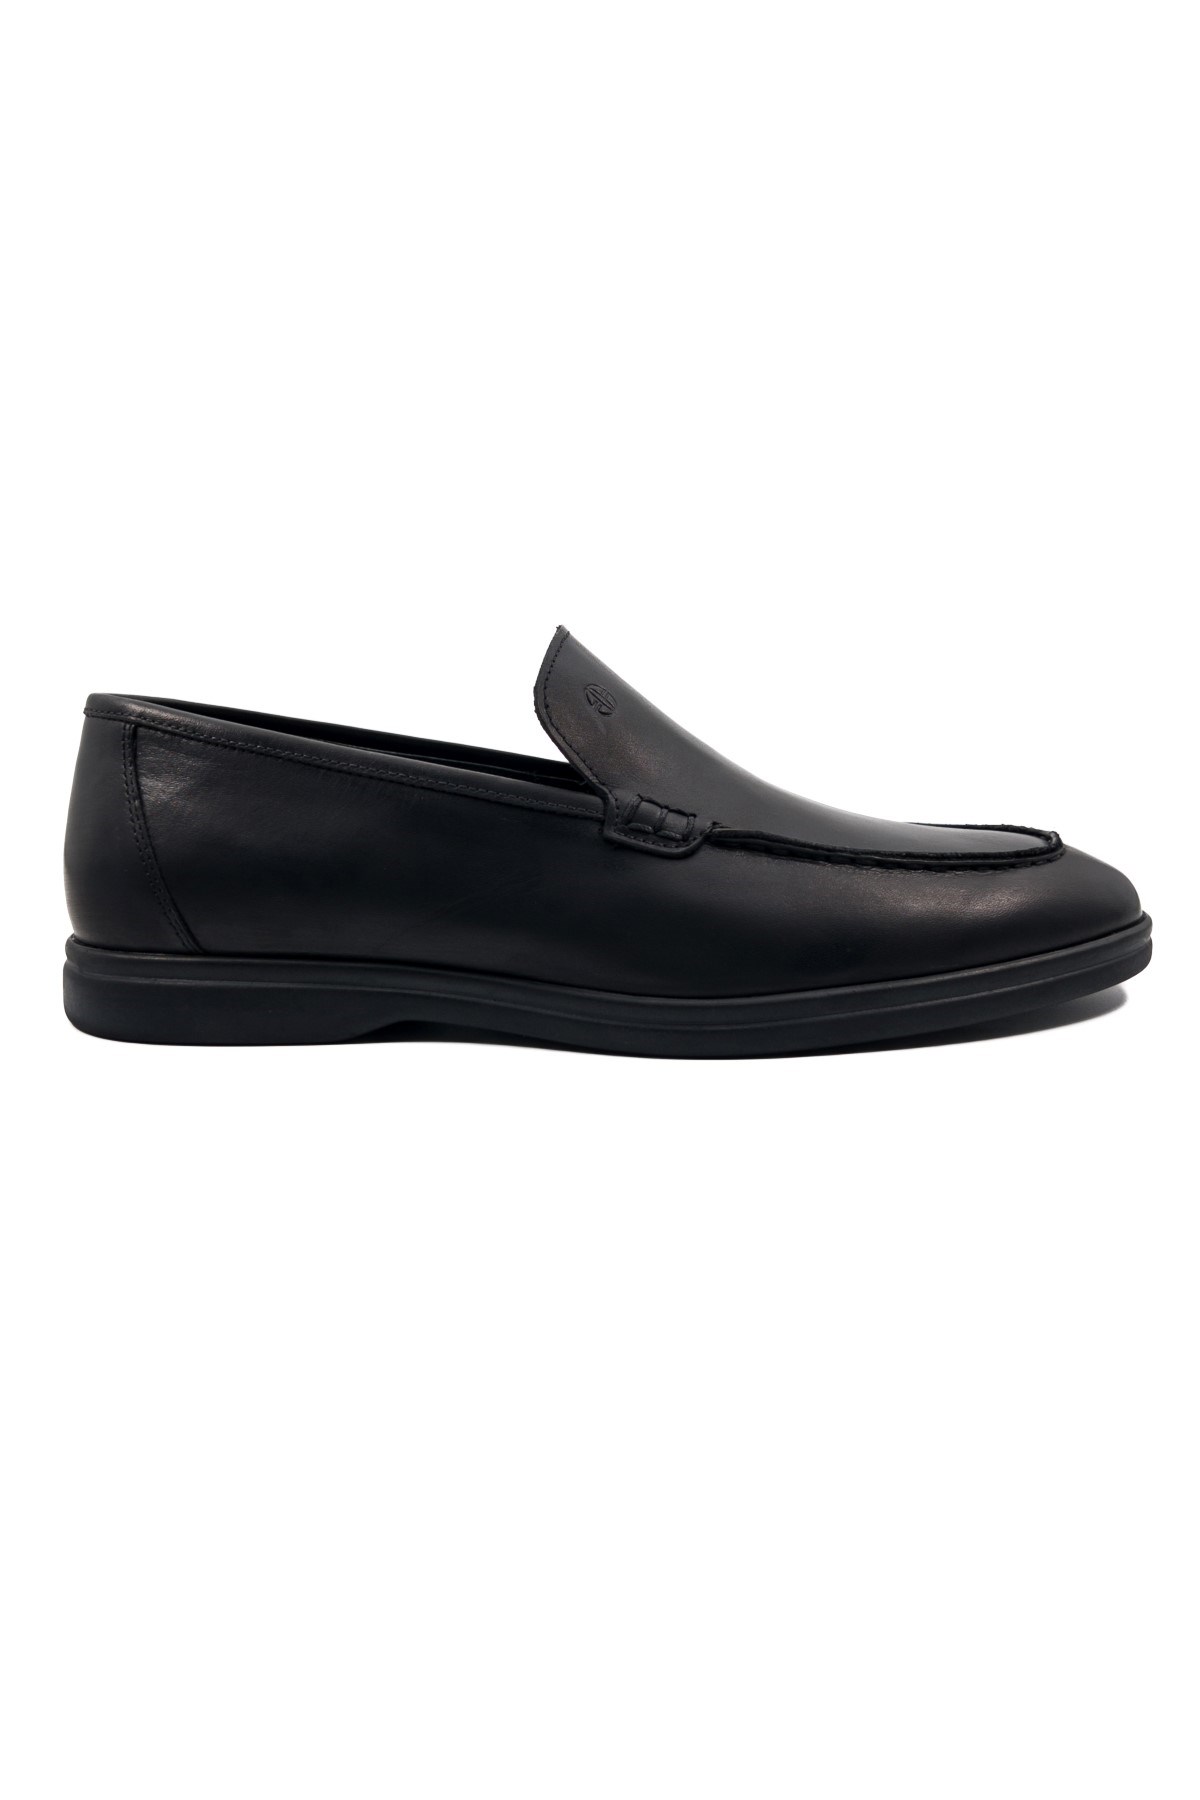 Allegro Black Genuine Leather Men's Loafers